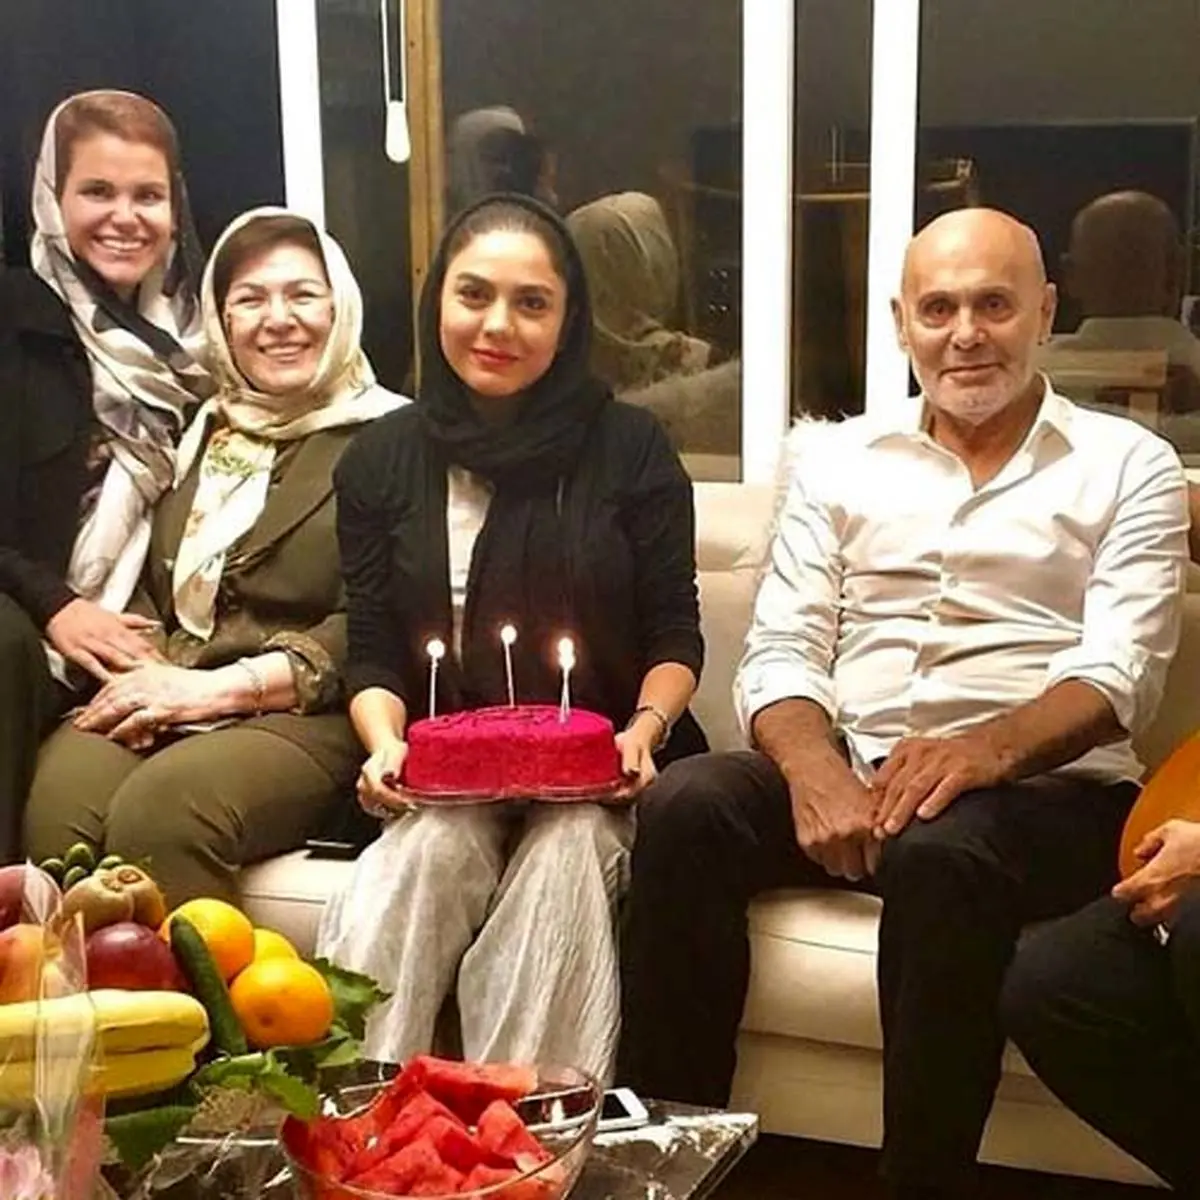 لباس اتو کشیده و شیک جمشید هاشم پور در جشن تولدش | پنت هوس جمشید هاشم پور در دل تهران